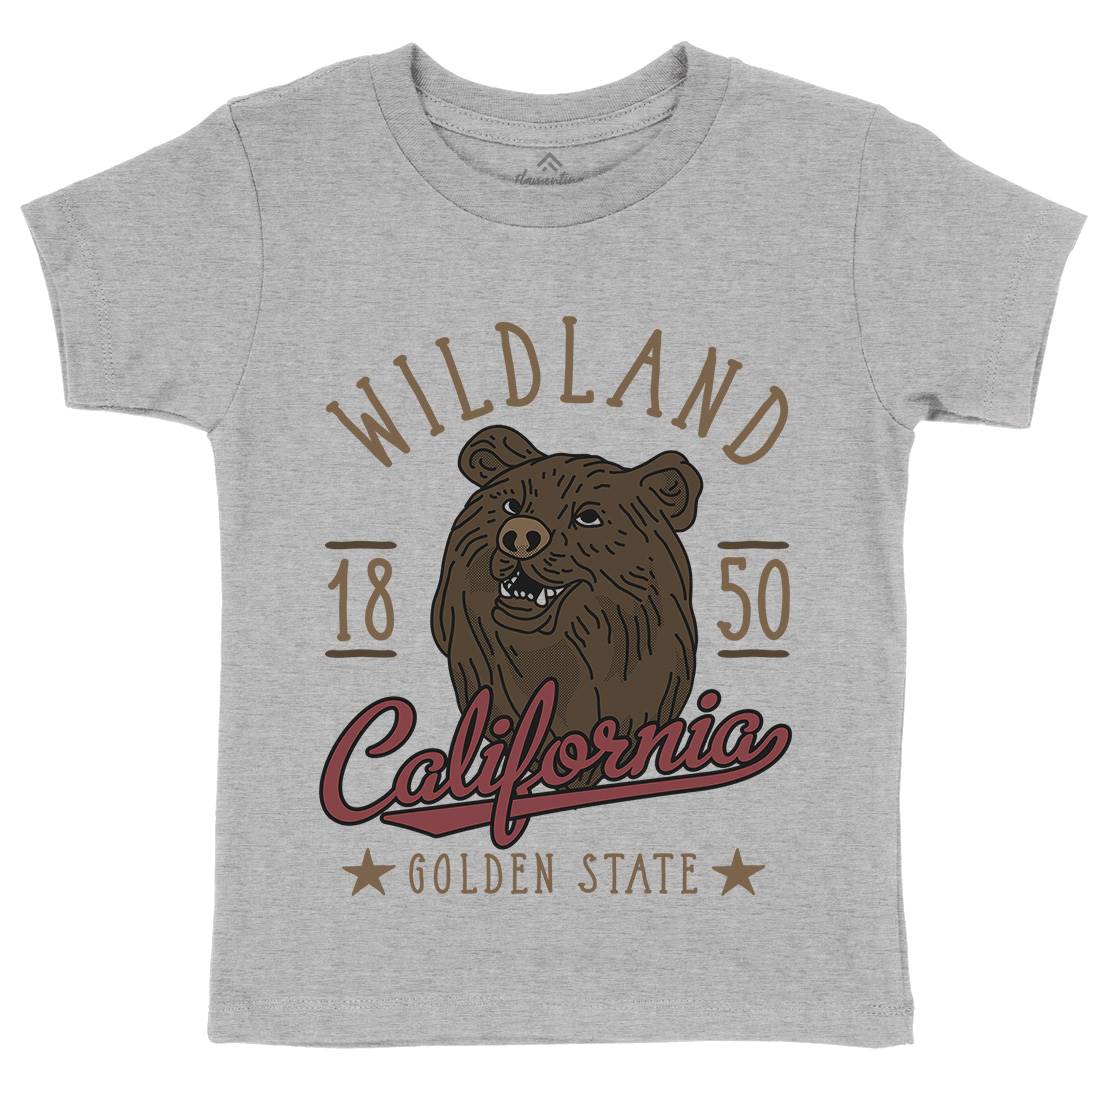 Wildland California Kids Crew Neck T-Shirt Animals D999